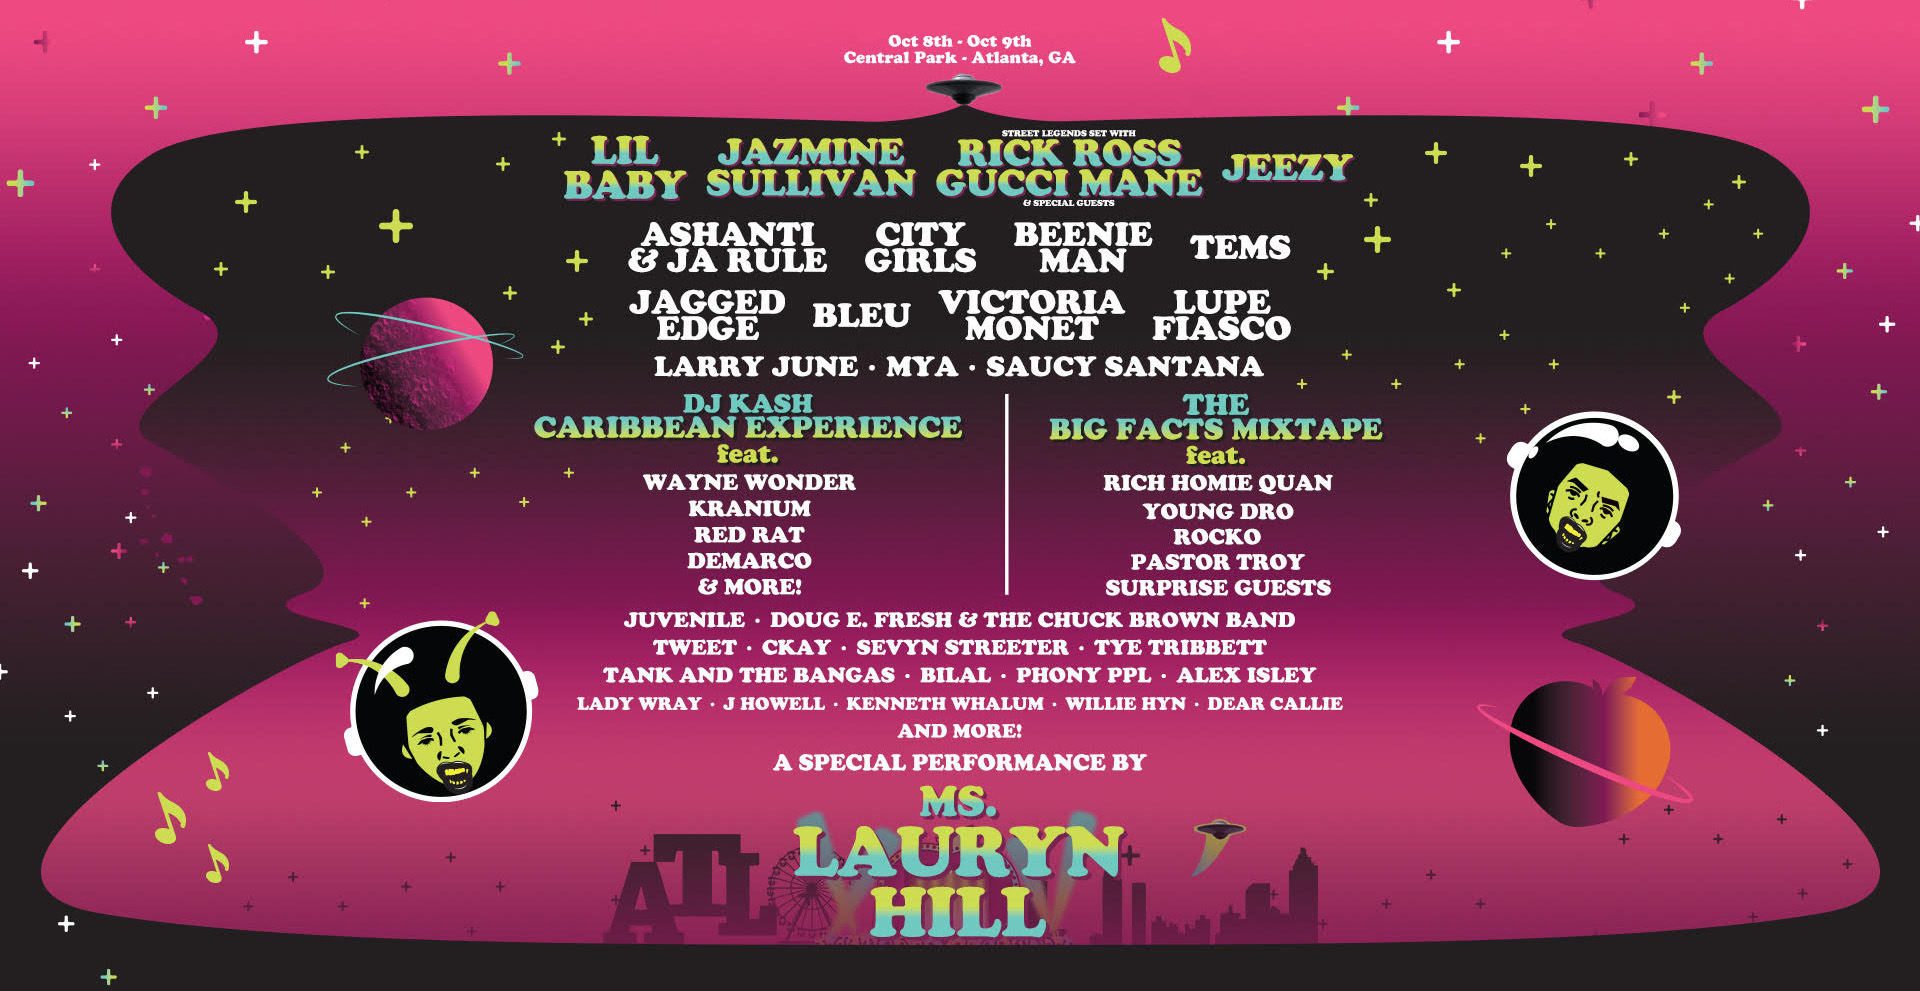 ONE Musicfest Atlanta 2022 lineup announced Lauryn Hill, Lil Baby